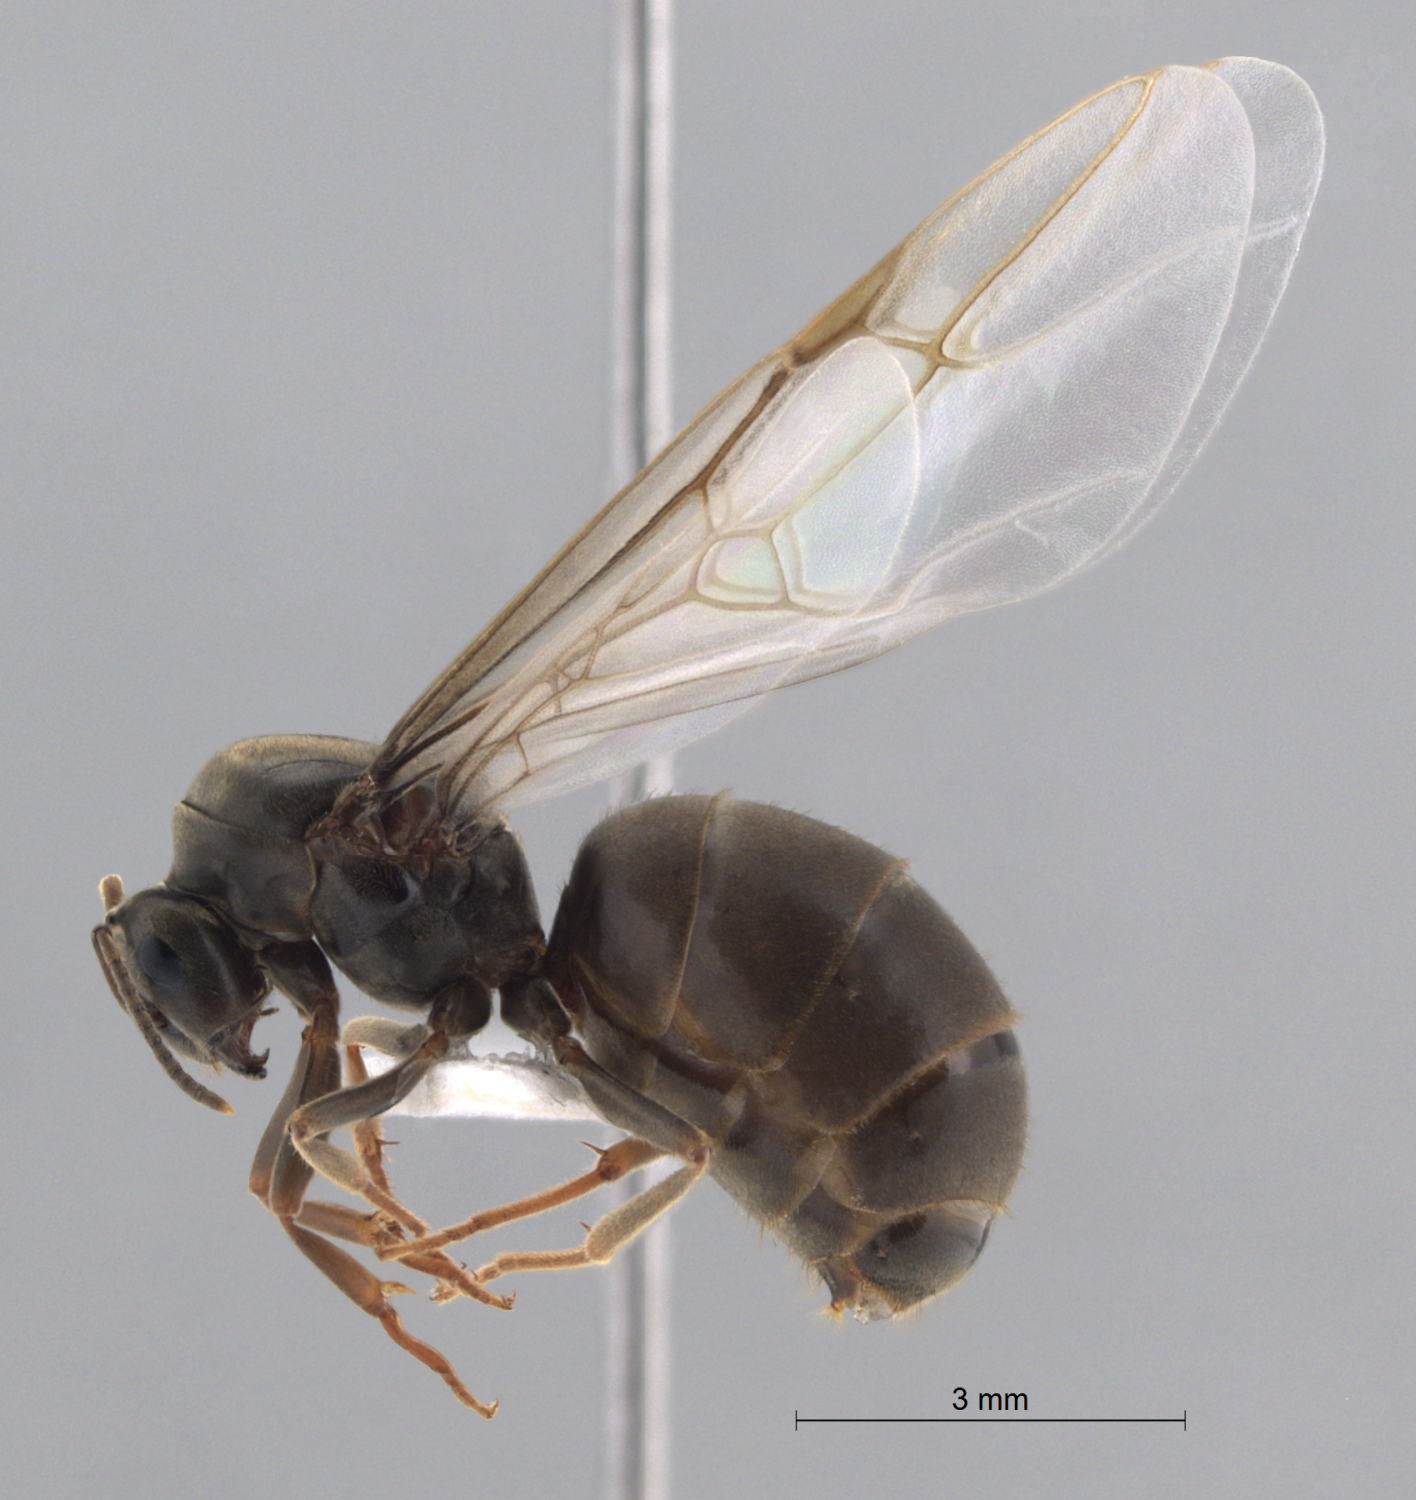  Lasius niger queen lateral